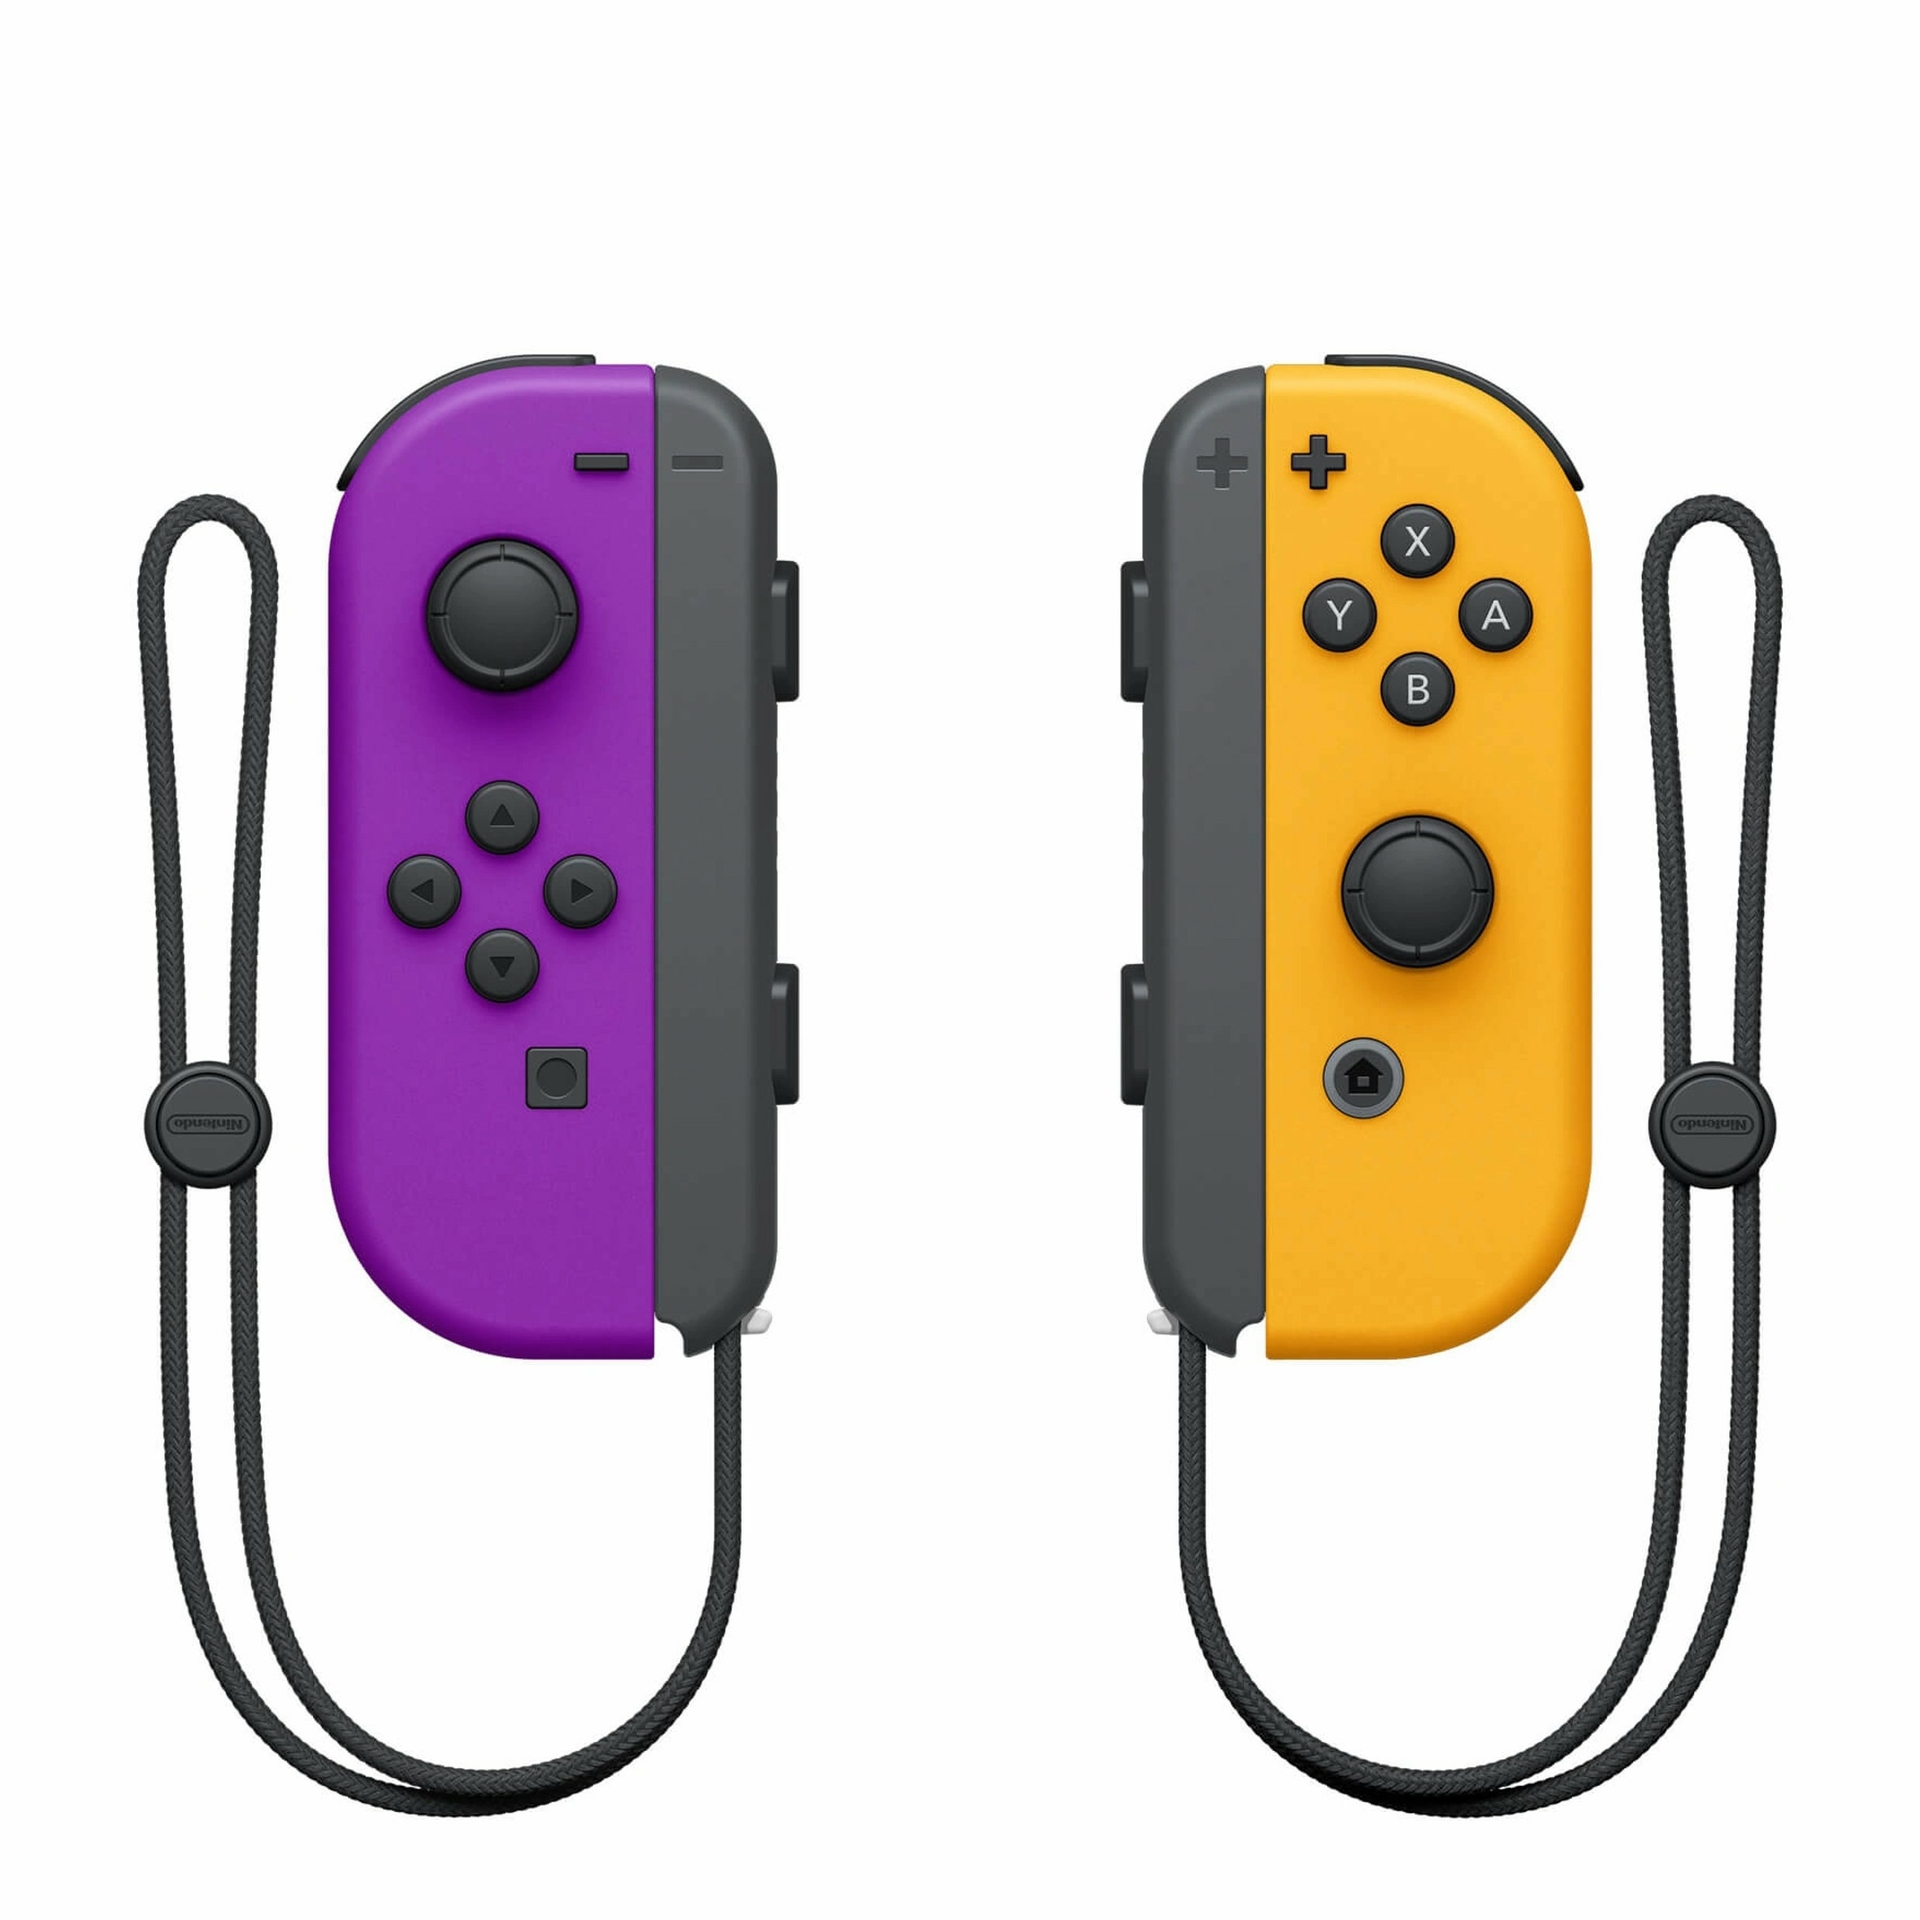 Nintendo Switch Joy-Con Controllers - Paars/Oranje - Nintendo Switch Hardware